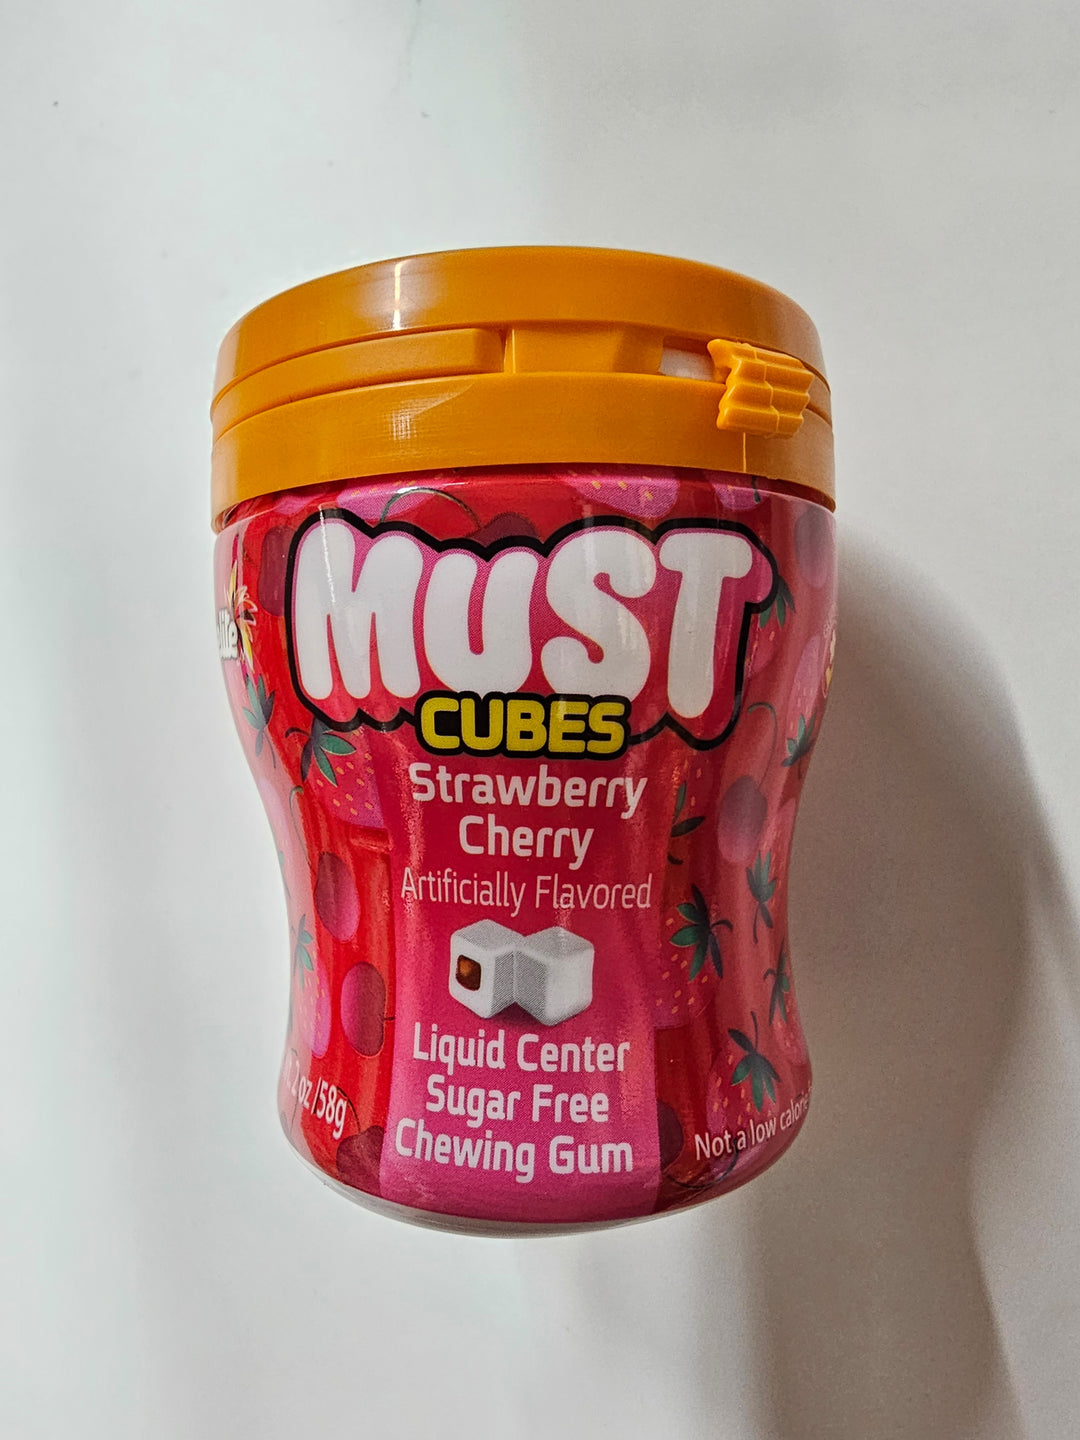 Elite Gum S/F Strawberry Cherry Cubes 2 Oz